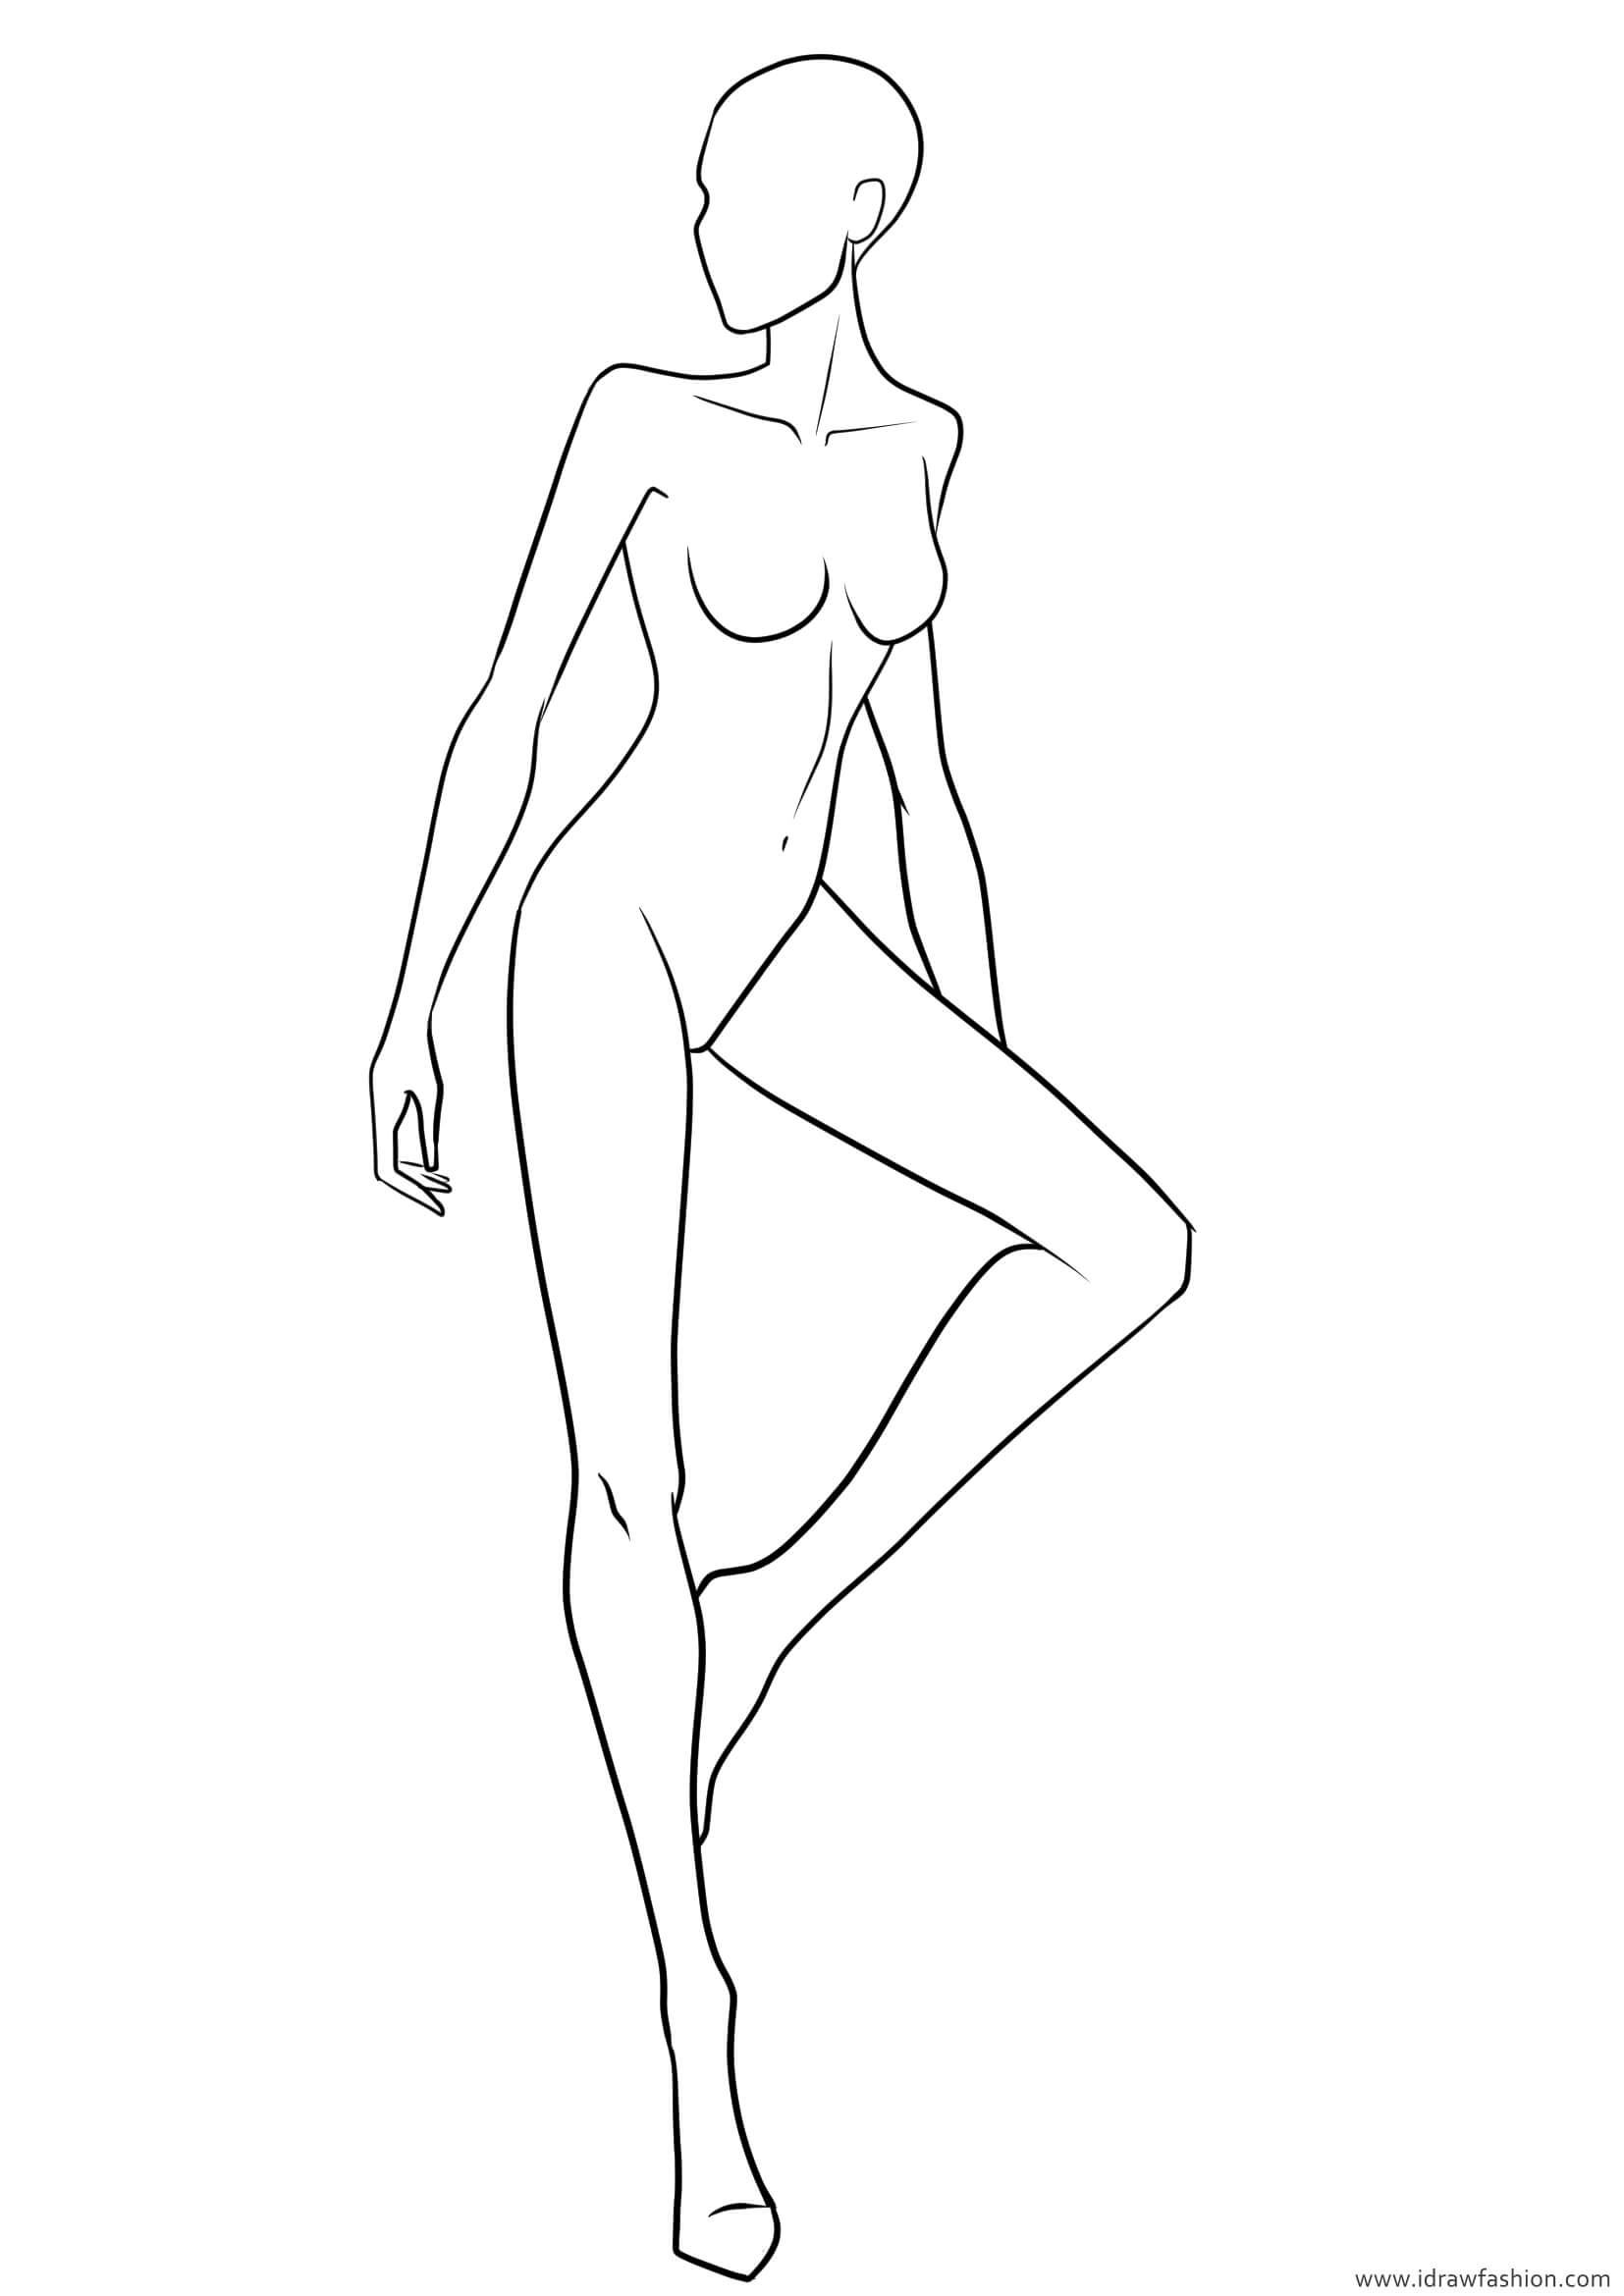 Download Free Fashion Templates I Draw Fashion - Blank Body Drawing. 